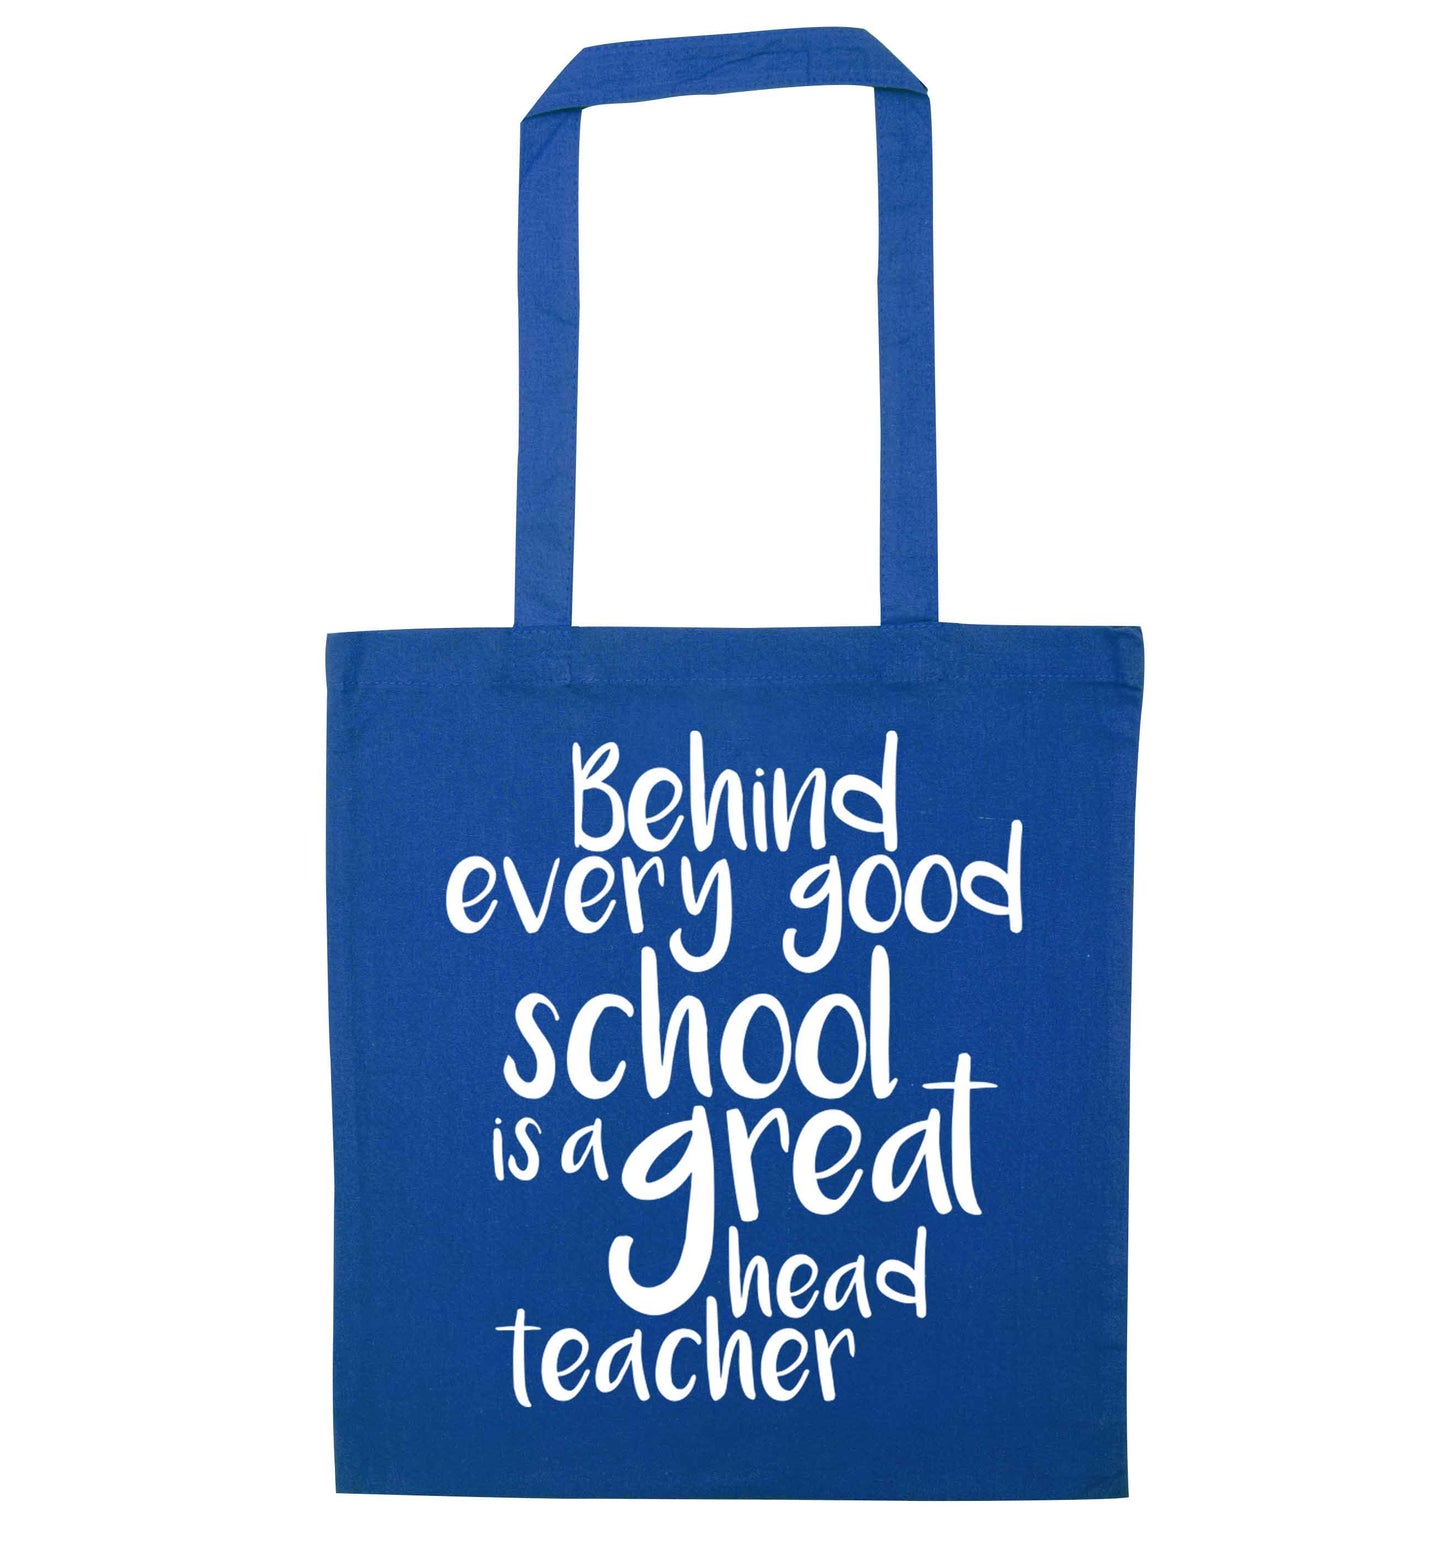 Behind every good school is a great head teacher blue tote bag